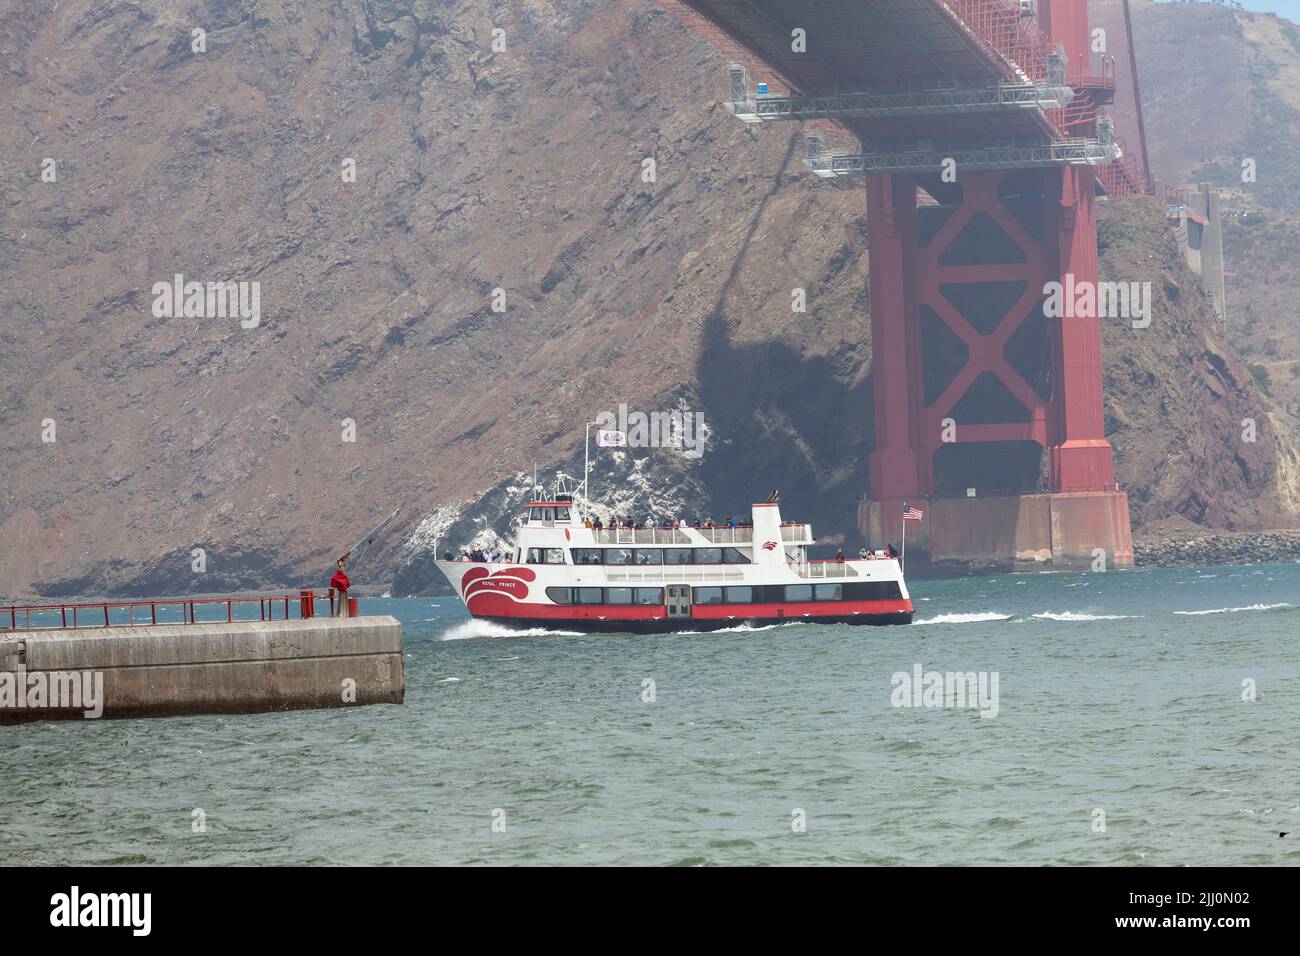 Red & White fleet Royal Prince sightseeing and charter cruising  under the Golden Gate bridge, San Francisco, California, USA Stock Photo